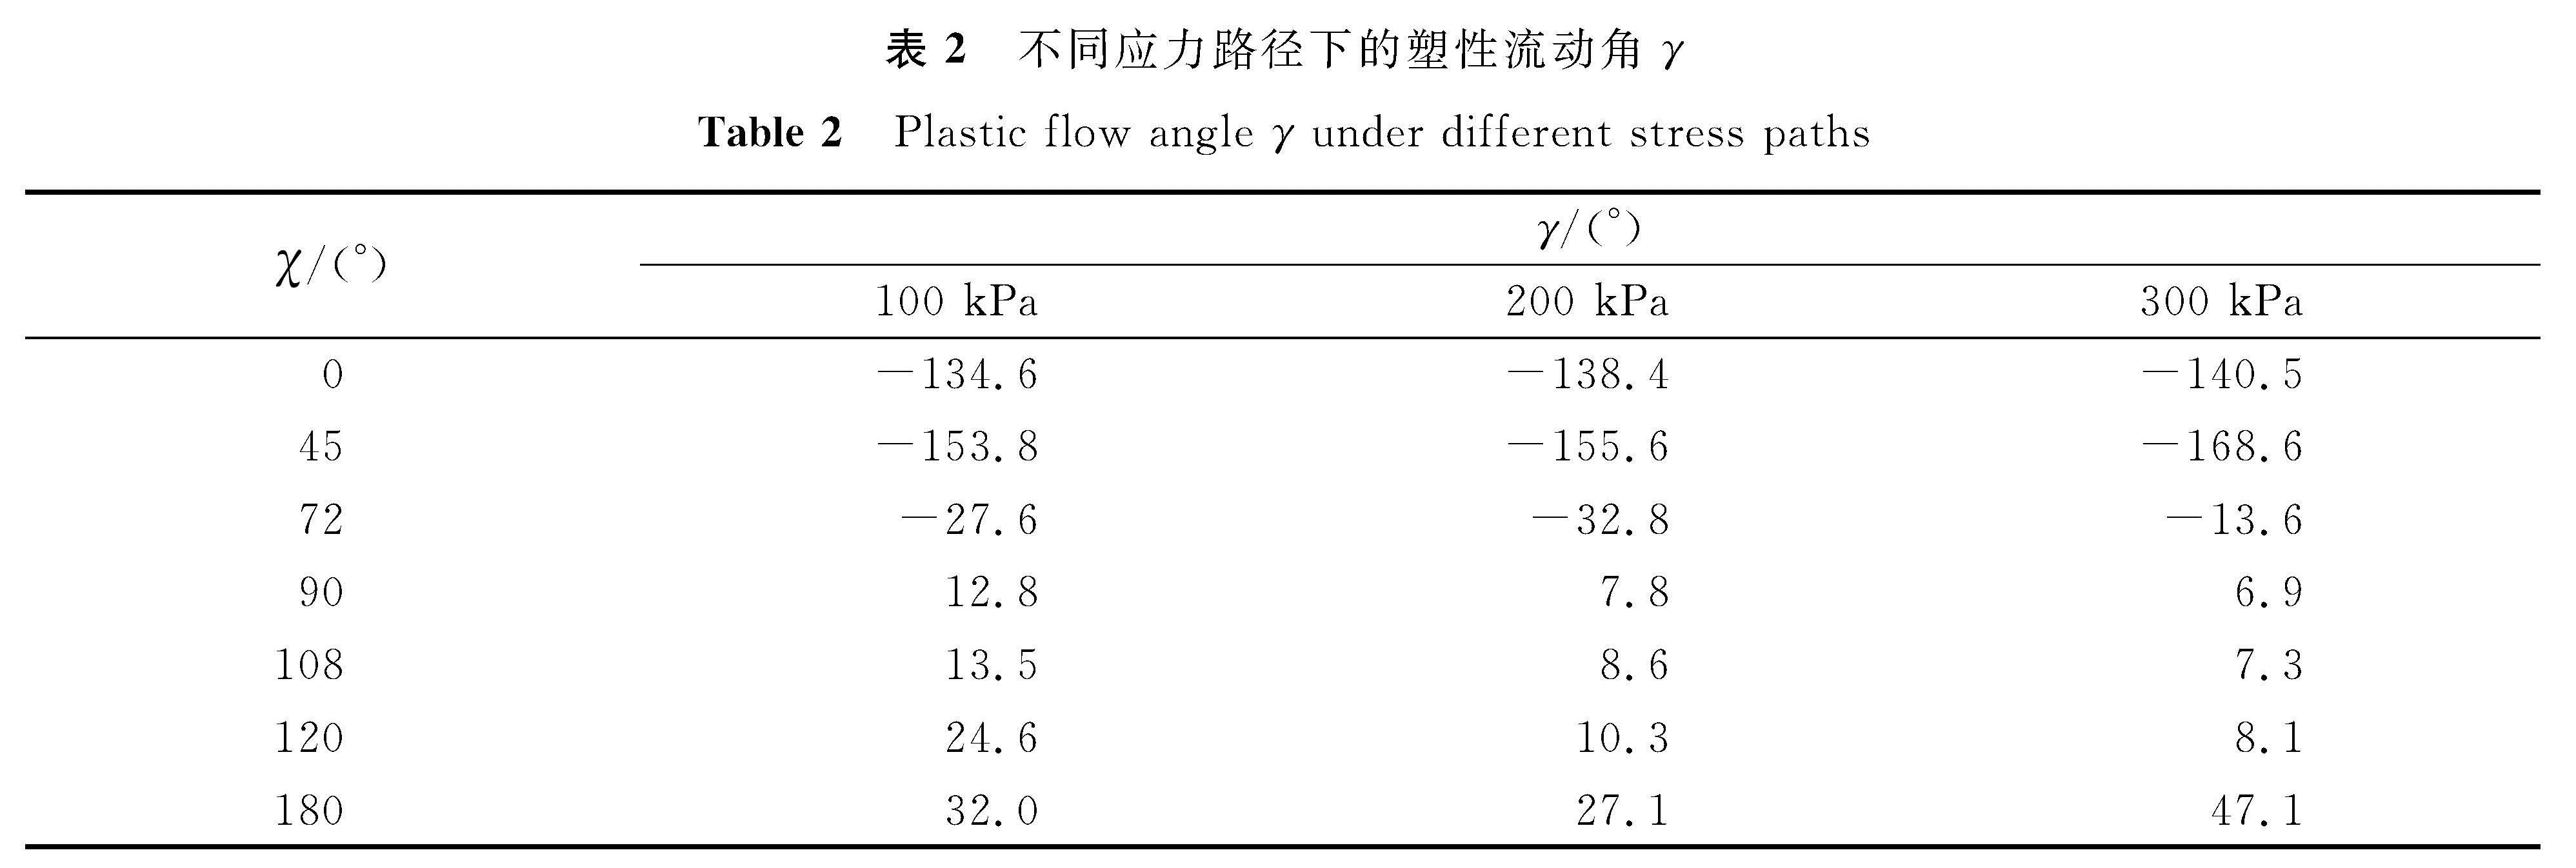 表2 不同应力路径下的塑性流动角γ<br/>Table 2 Plastic flow angle γ under different stress paths